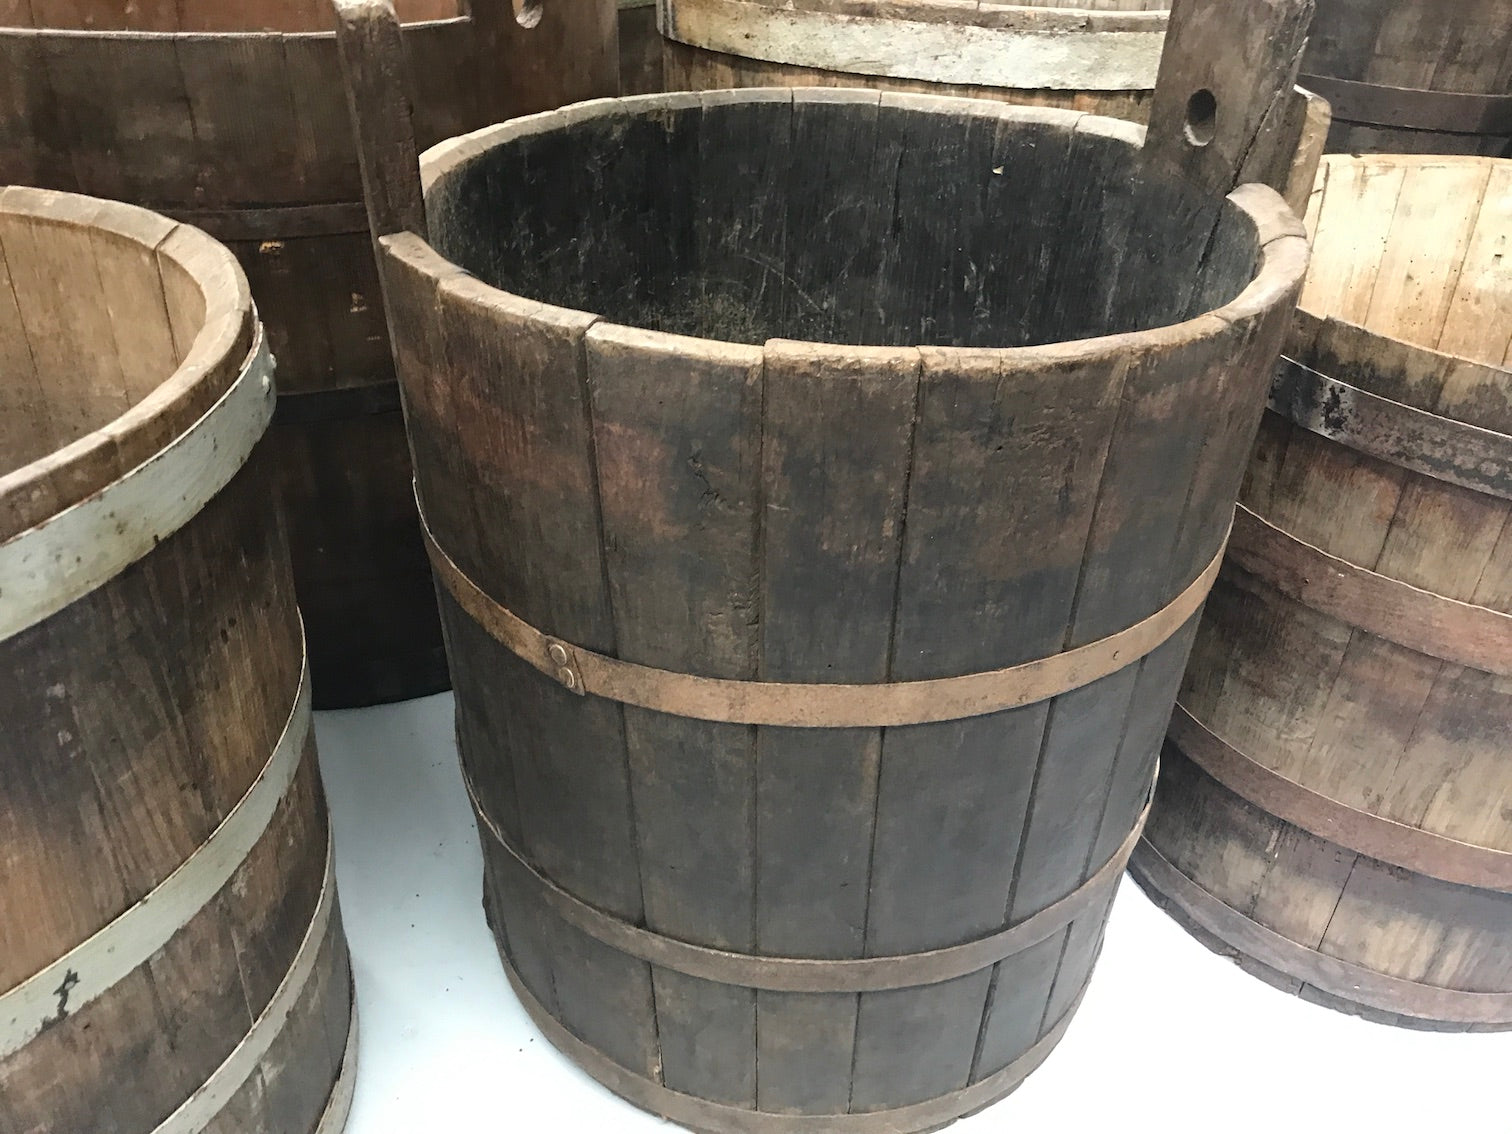 Vintage industrial French oak round wine barrel #1988/6